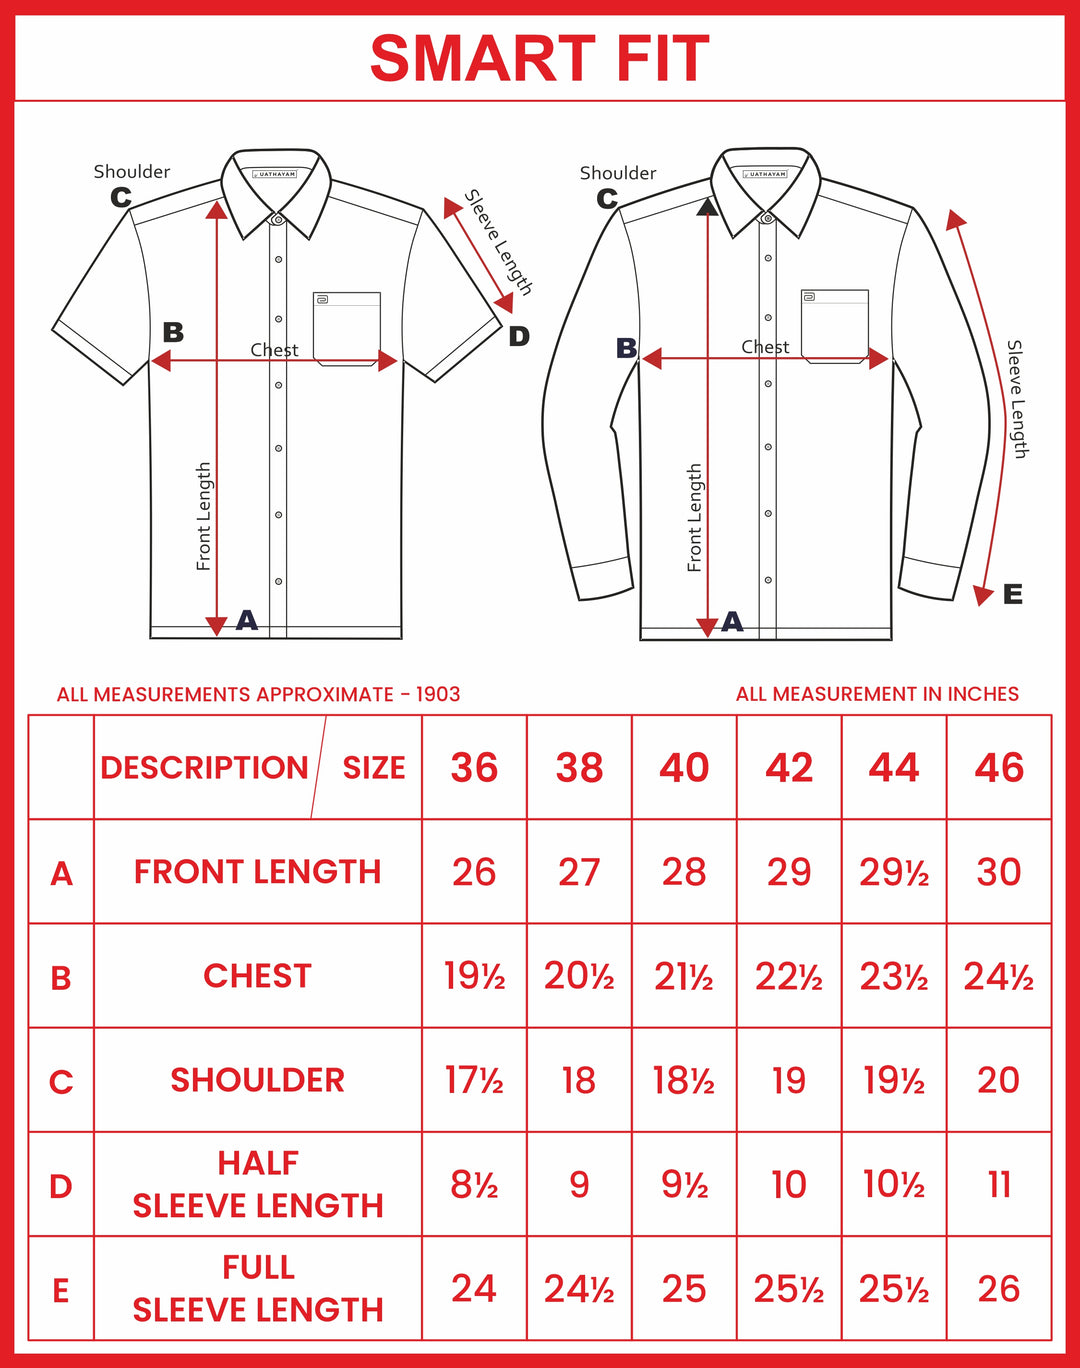 ARISER Luxor Solid Cotton Smart Fit Full Sleeve Shirt for Men - LX70012